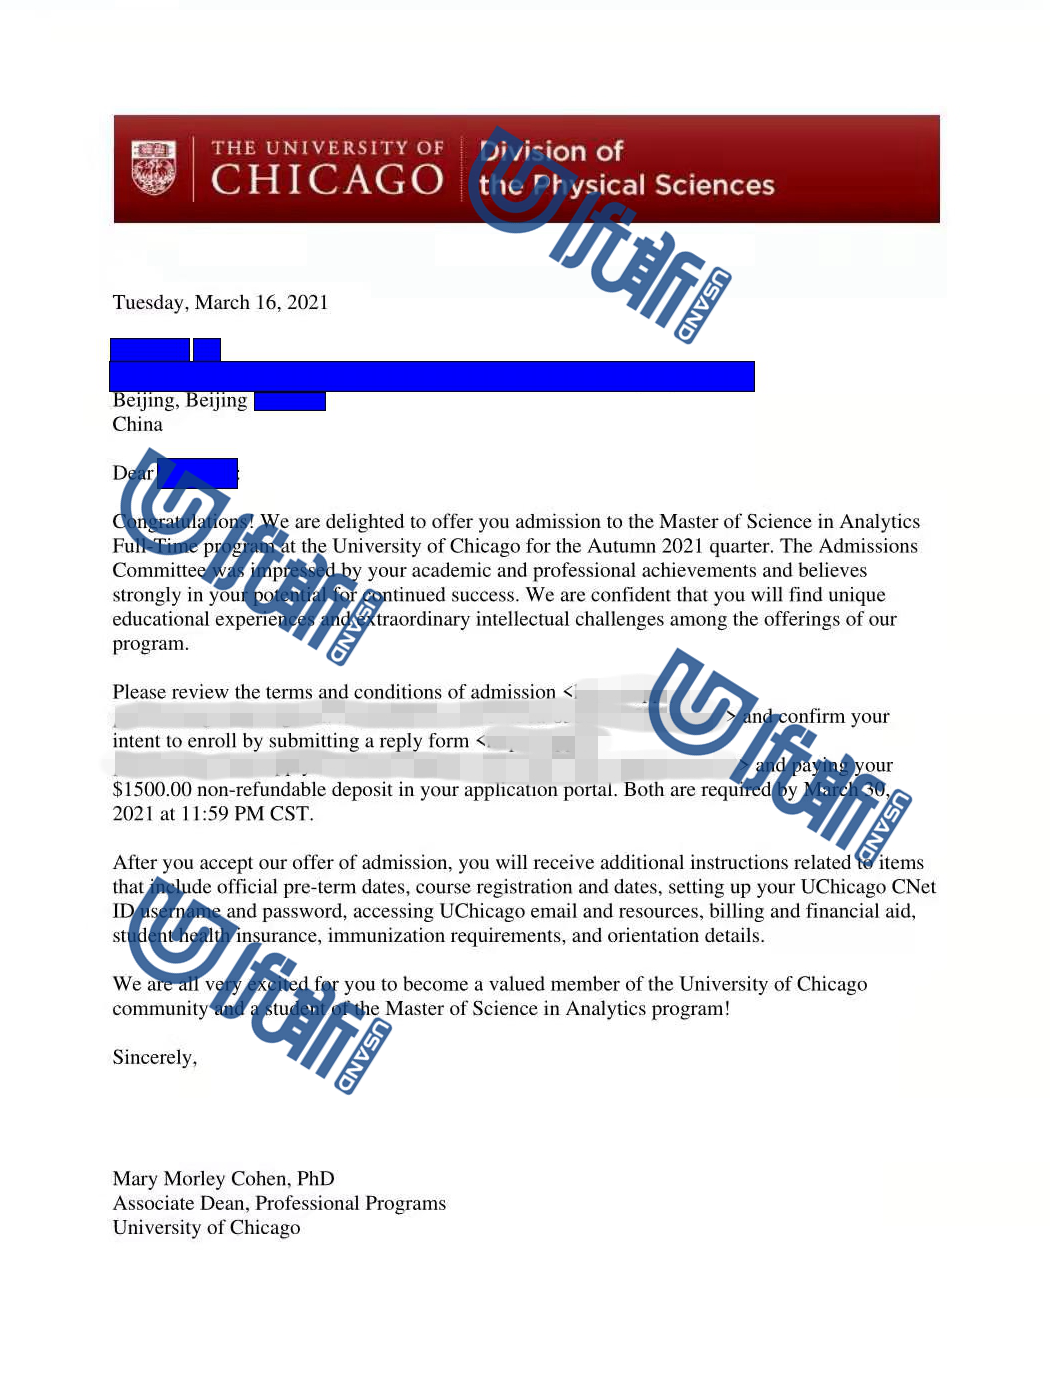 芝加哥大学 (The University of Chicago)